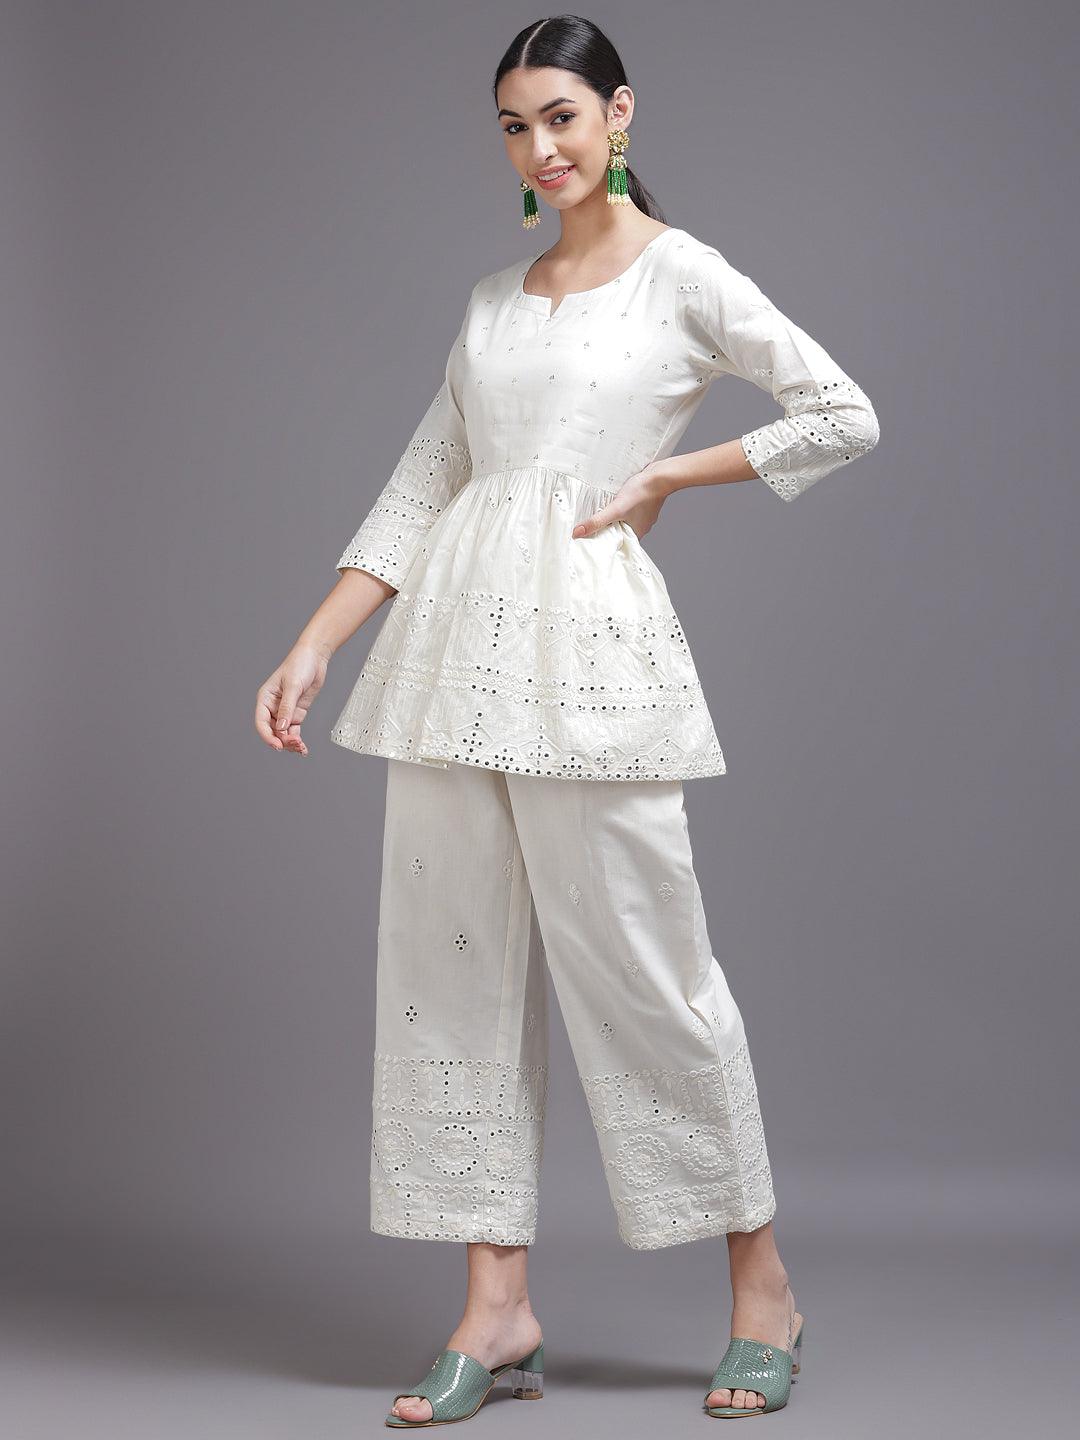 Buy Yaari White Cotton Cambric Full Mirror Work Kurti at Amazon.in